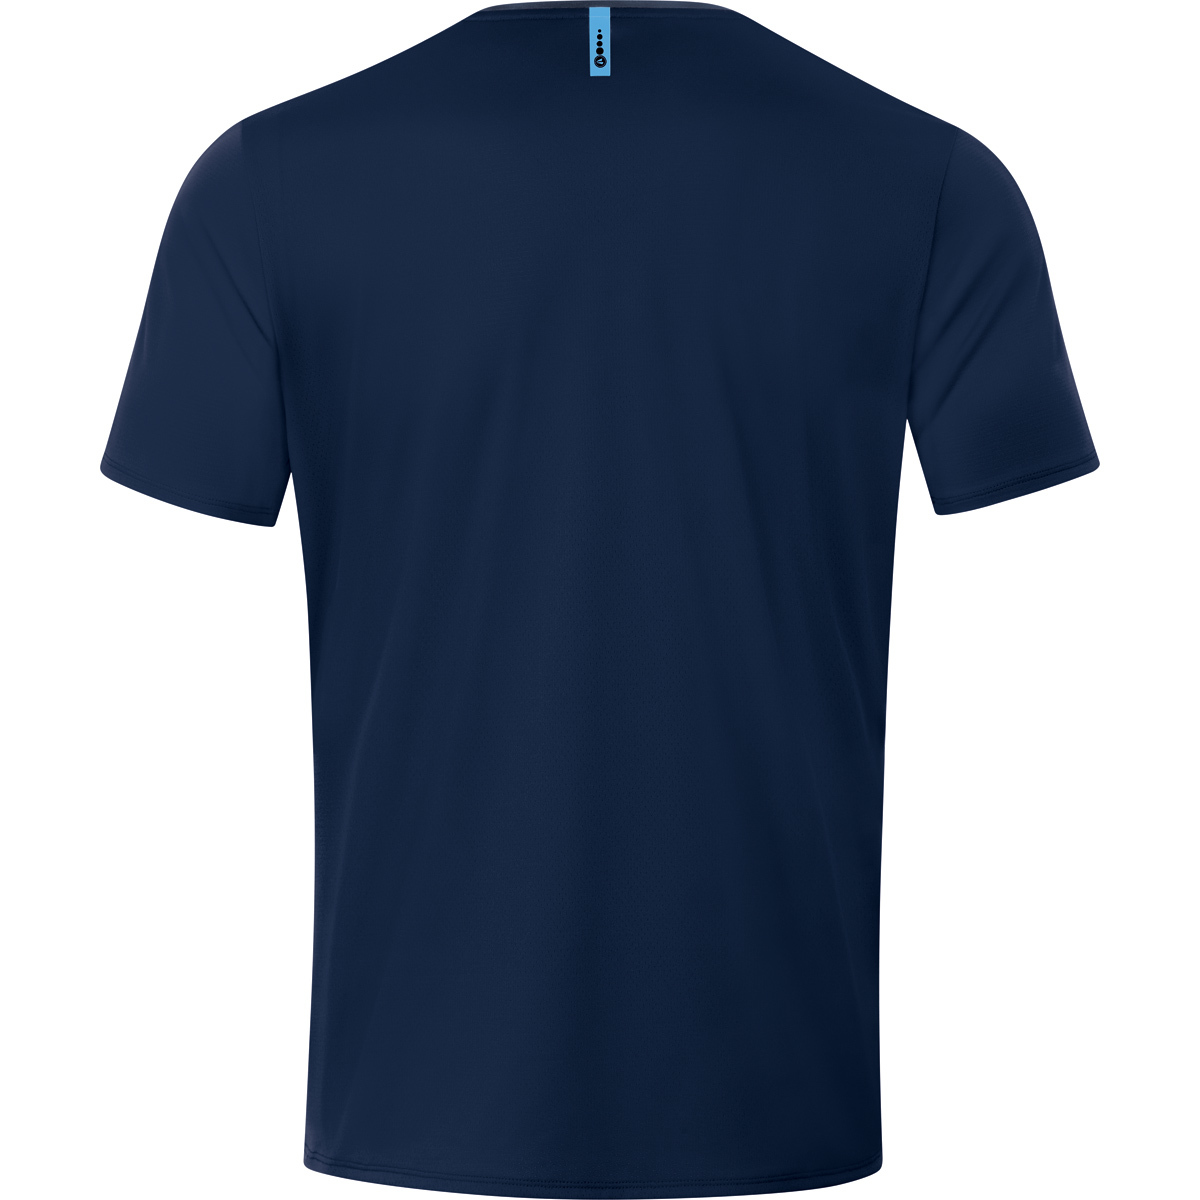 JAKO T-Shirt Champ Herren, 6120 L, marine/darkblue/skyblue, 2.0 Gr